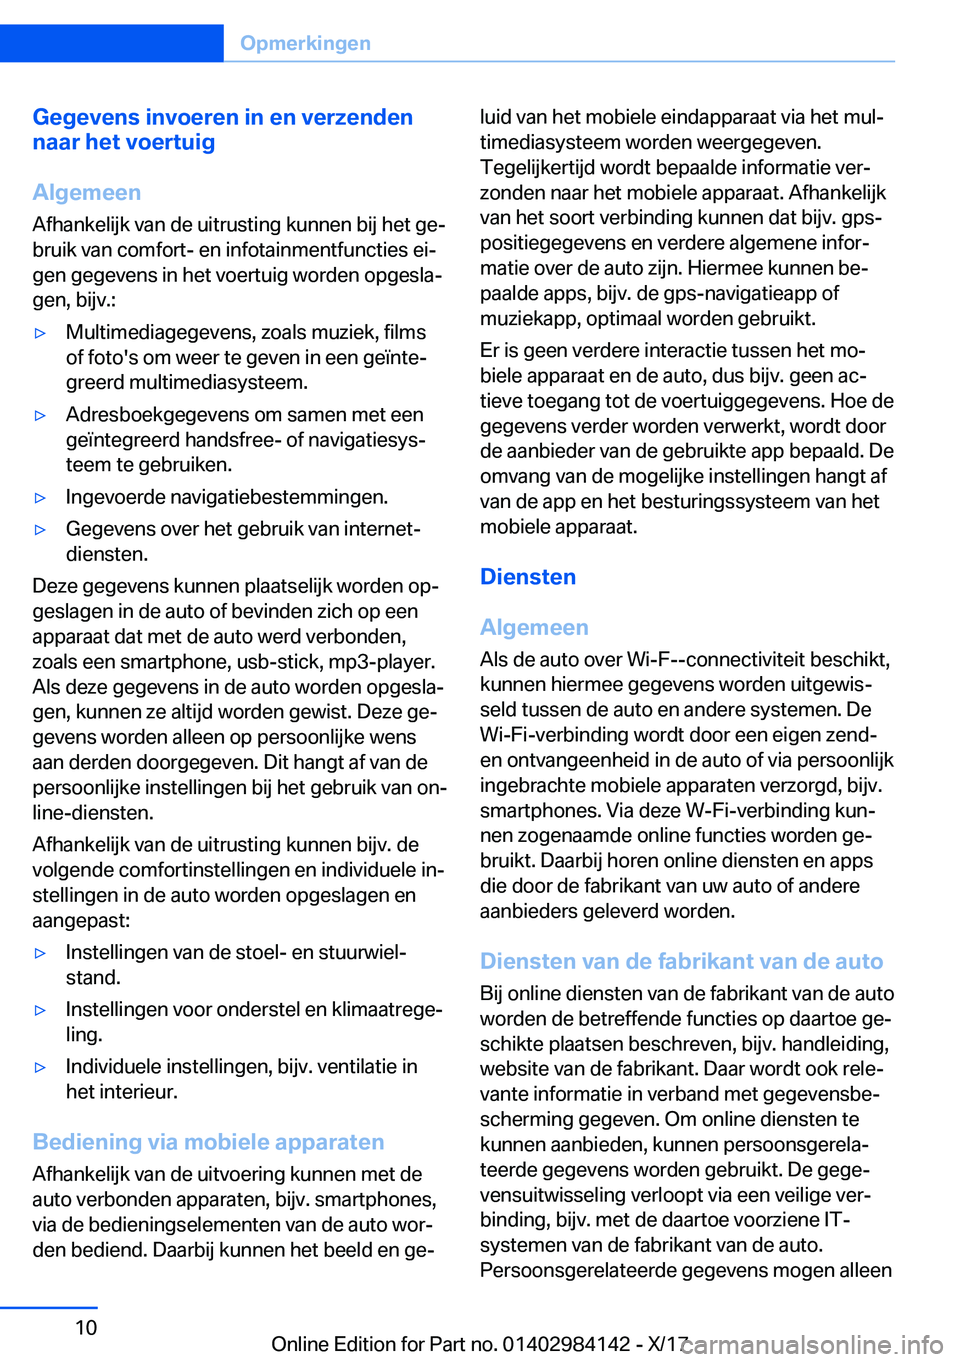 BMW 2 SERIES COUPE 2018  Instructieboekjes (in Dutch) �G�e�g�e�v�e�n�s��i�n�v�o�e�r�e�n��i�n��e�n��v�e�r�z�e�n�d�e�n
�n�a�a�r��h�e�t��v�o�e�r�t�u�i�g
�A�l�g�e�m�e�e�n
�A�f�h�a�n�k�e�l�i�j�k� �v�a�n� �d�e� �u�i�t�r�u�s�t�i�n�g� �k�u�n�n�e�n� �b�i�j�